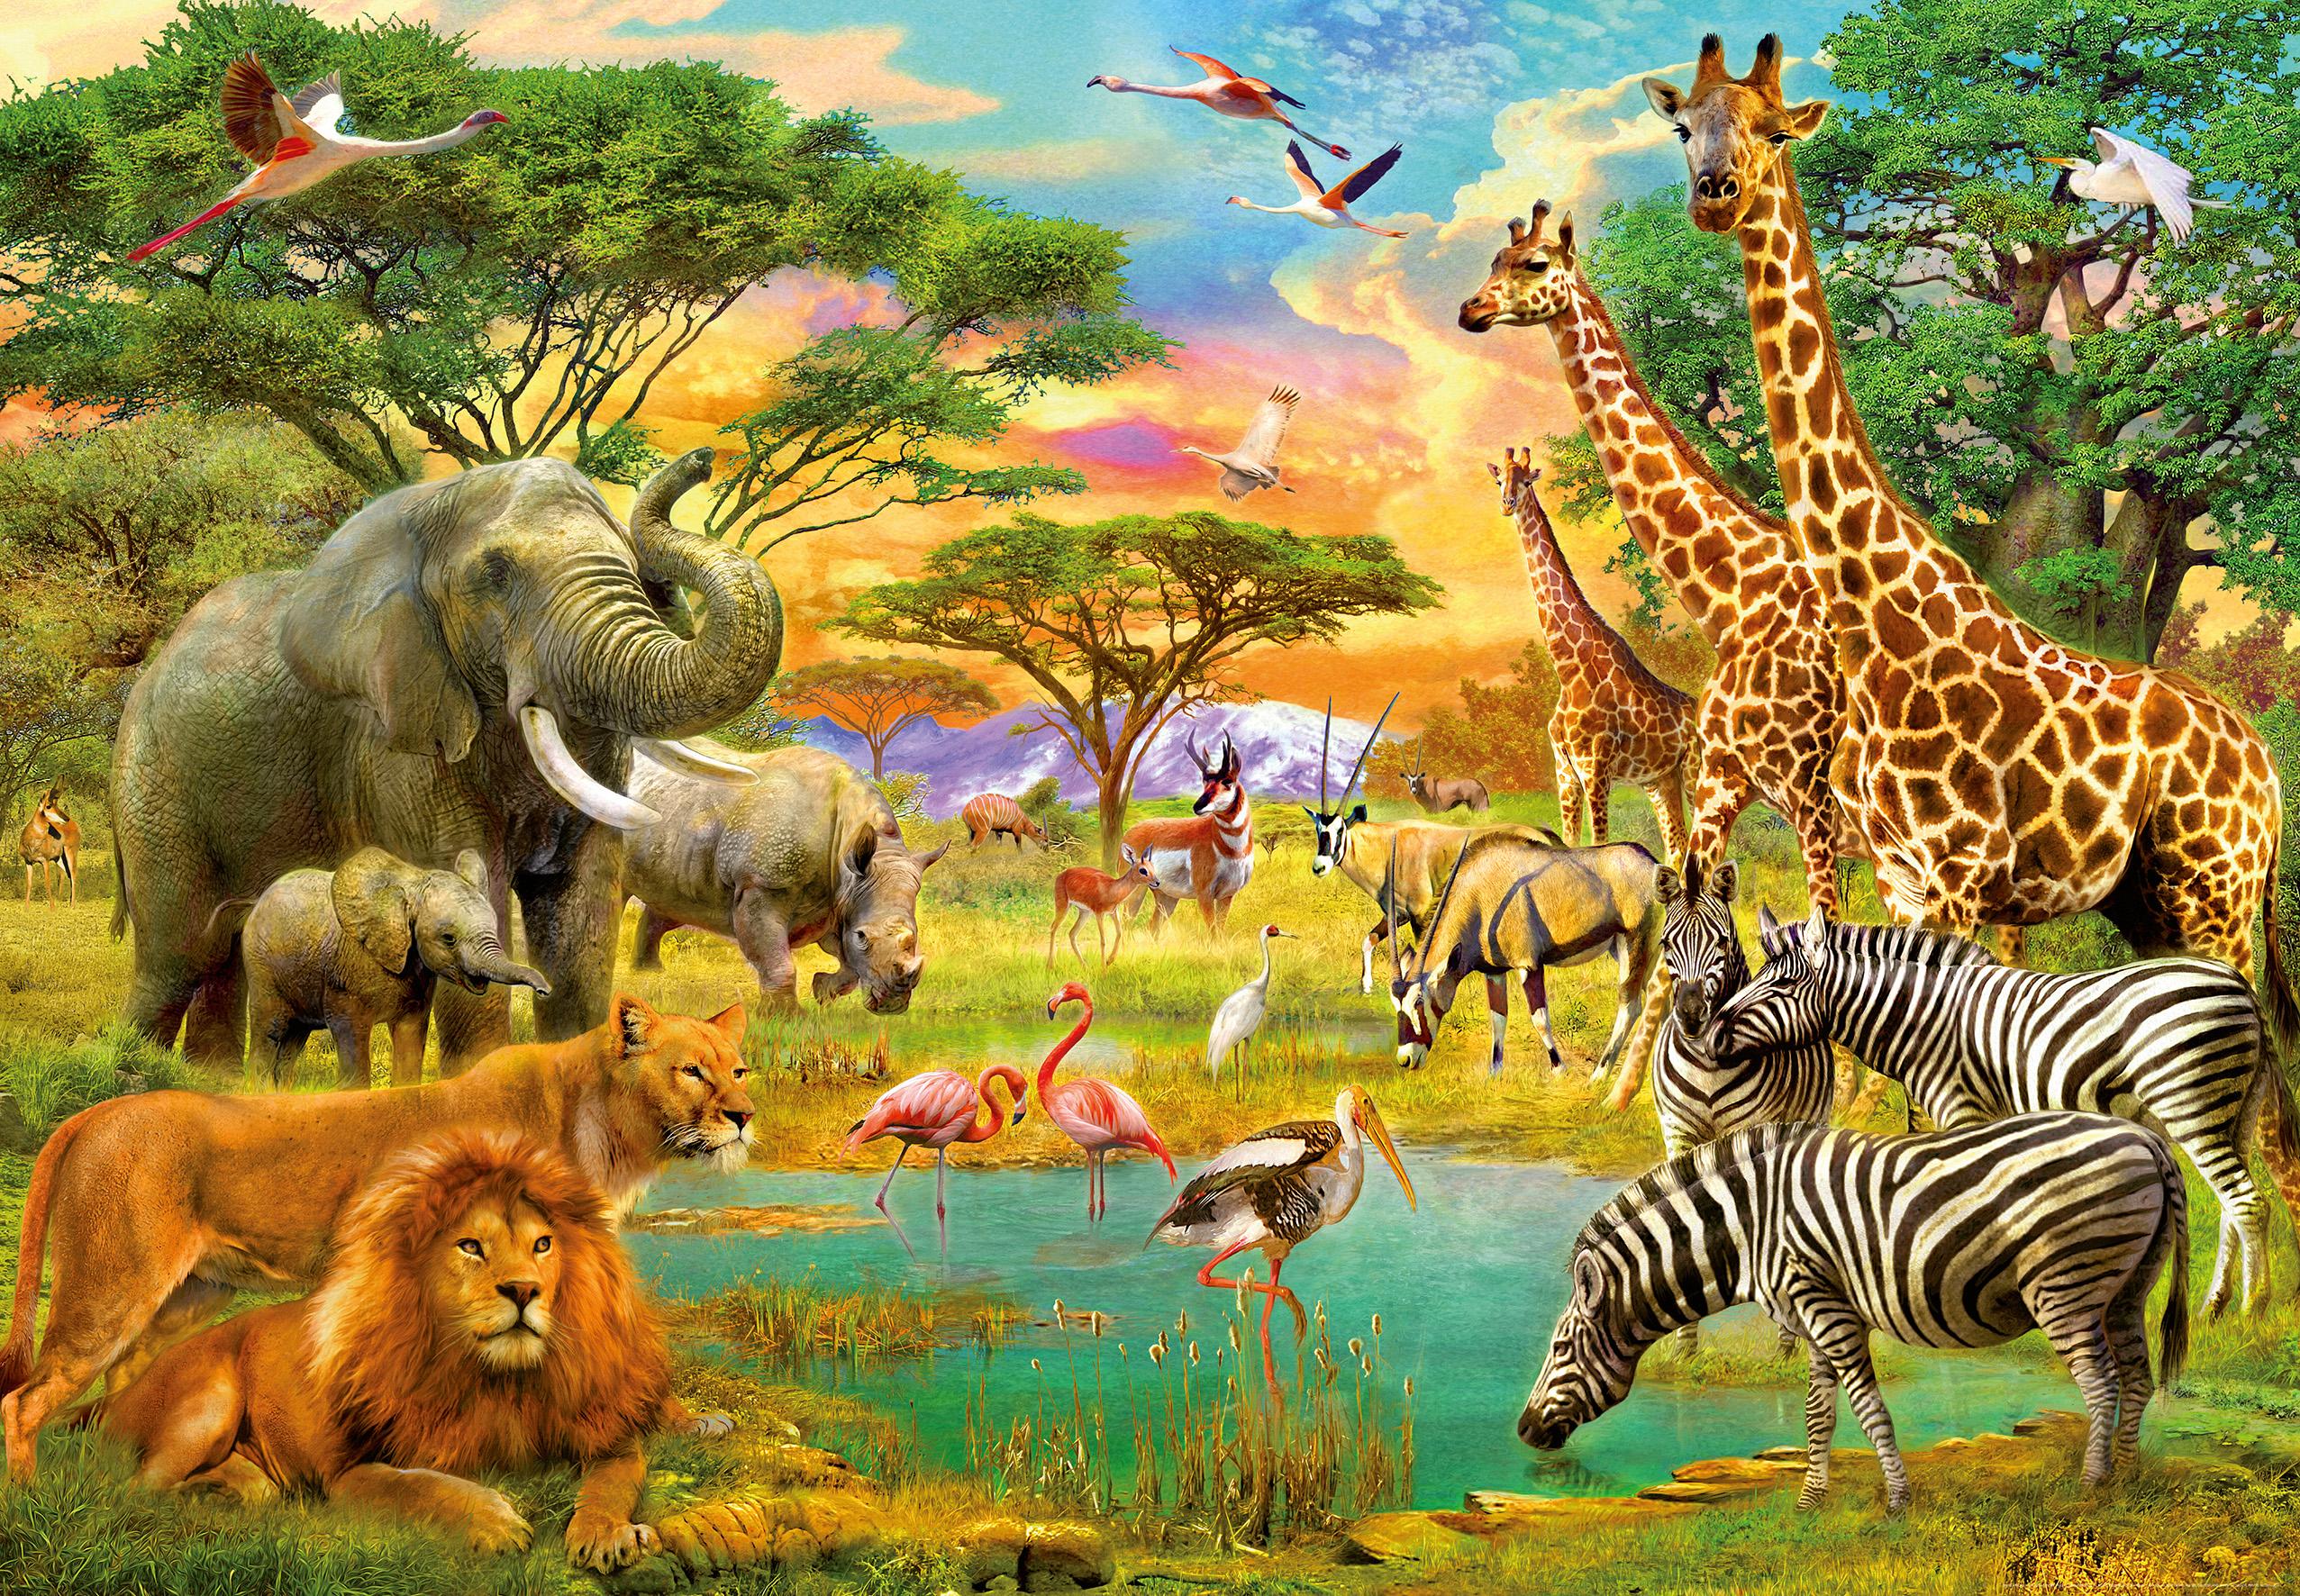 Wallpapers African animals version 1 giraffe on the desktop